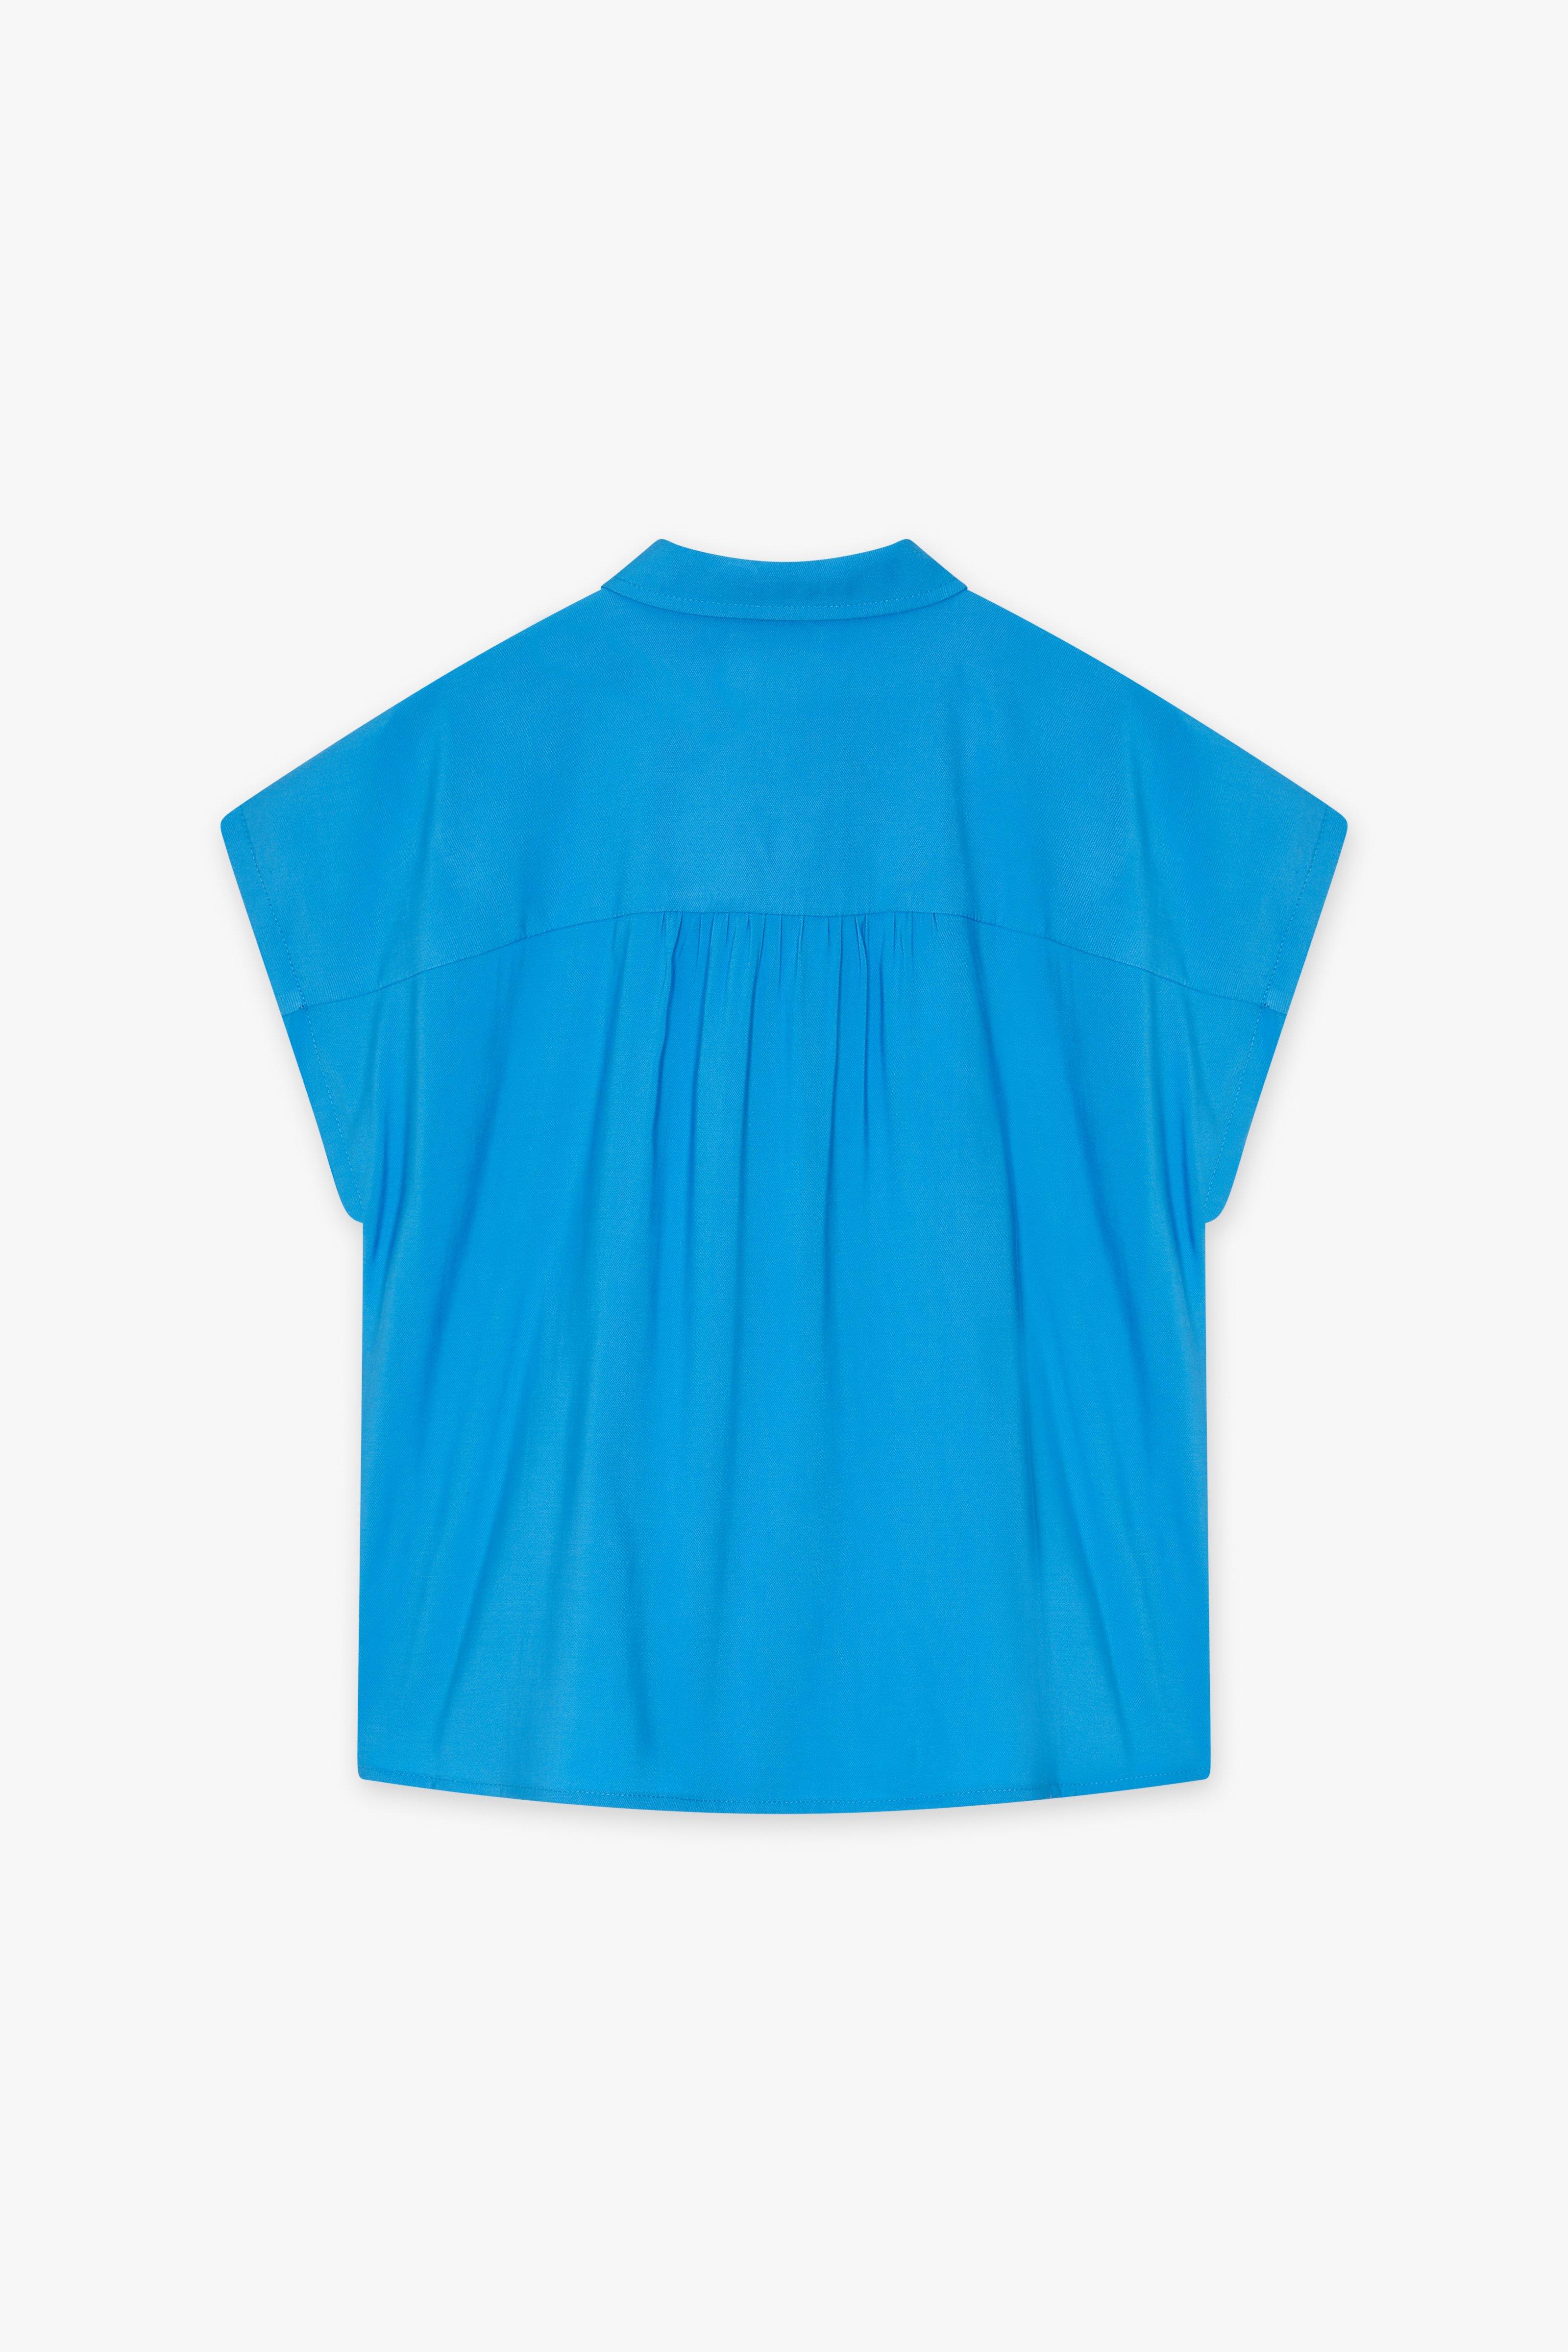 CKS Dames - ECHO - blouse mouwloos - intens blauw